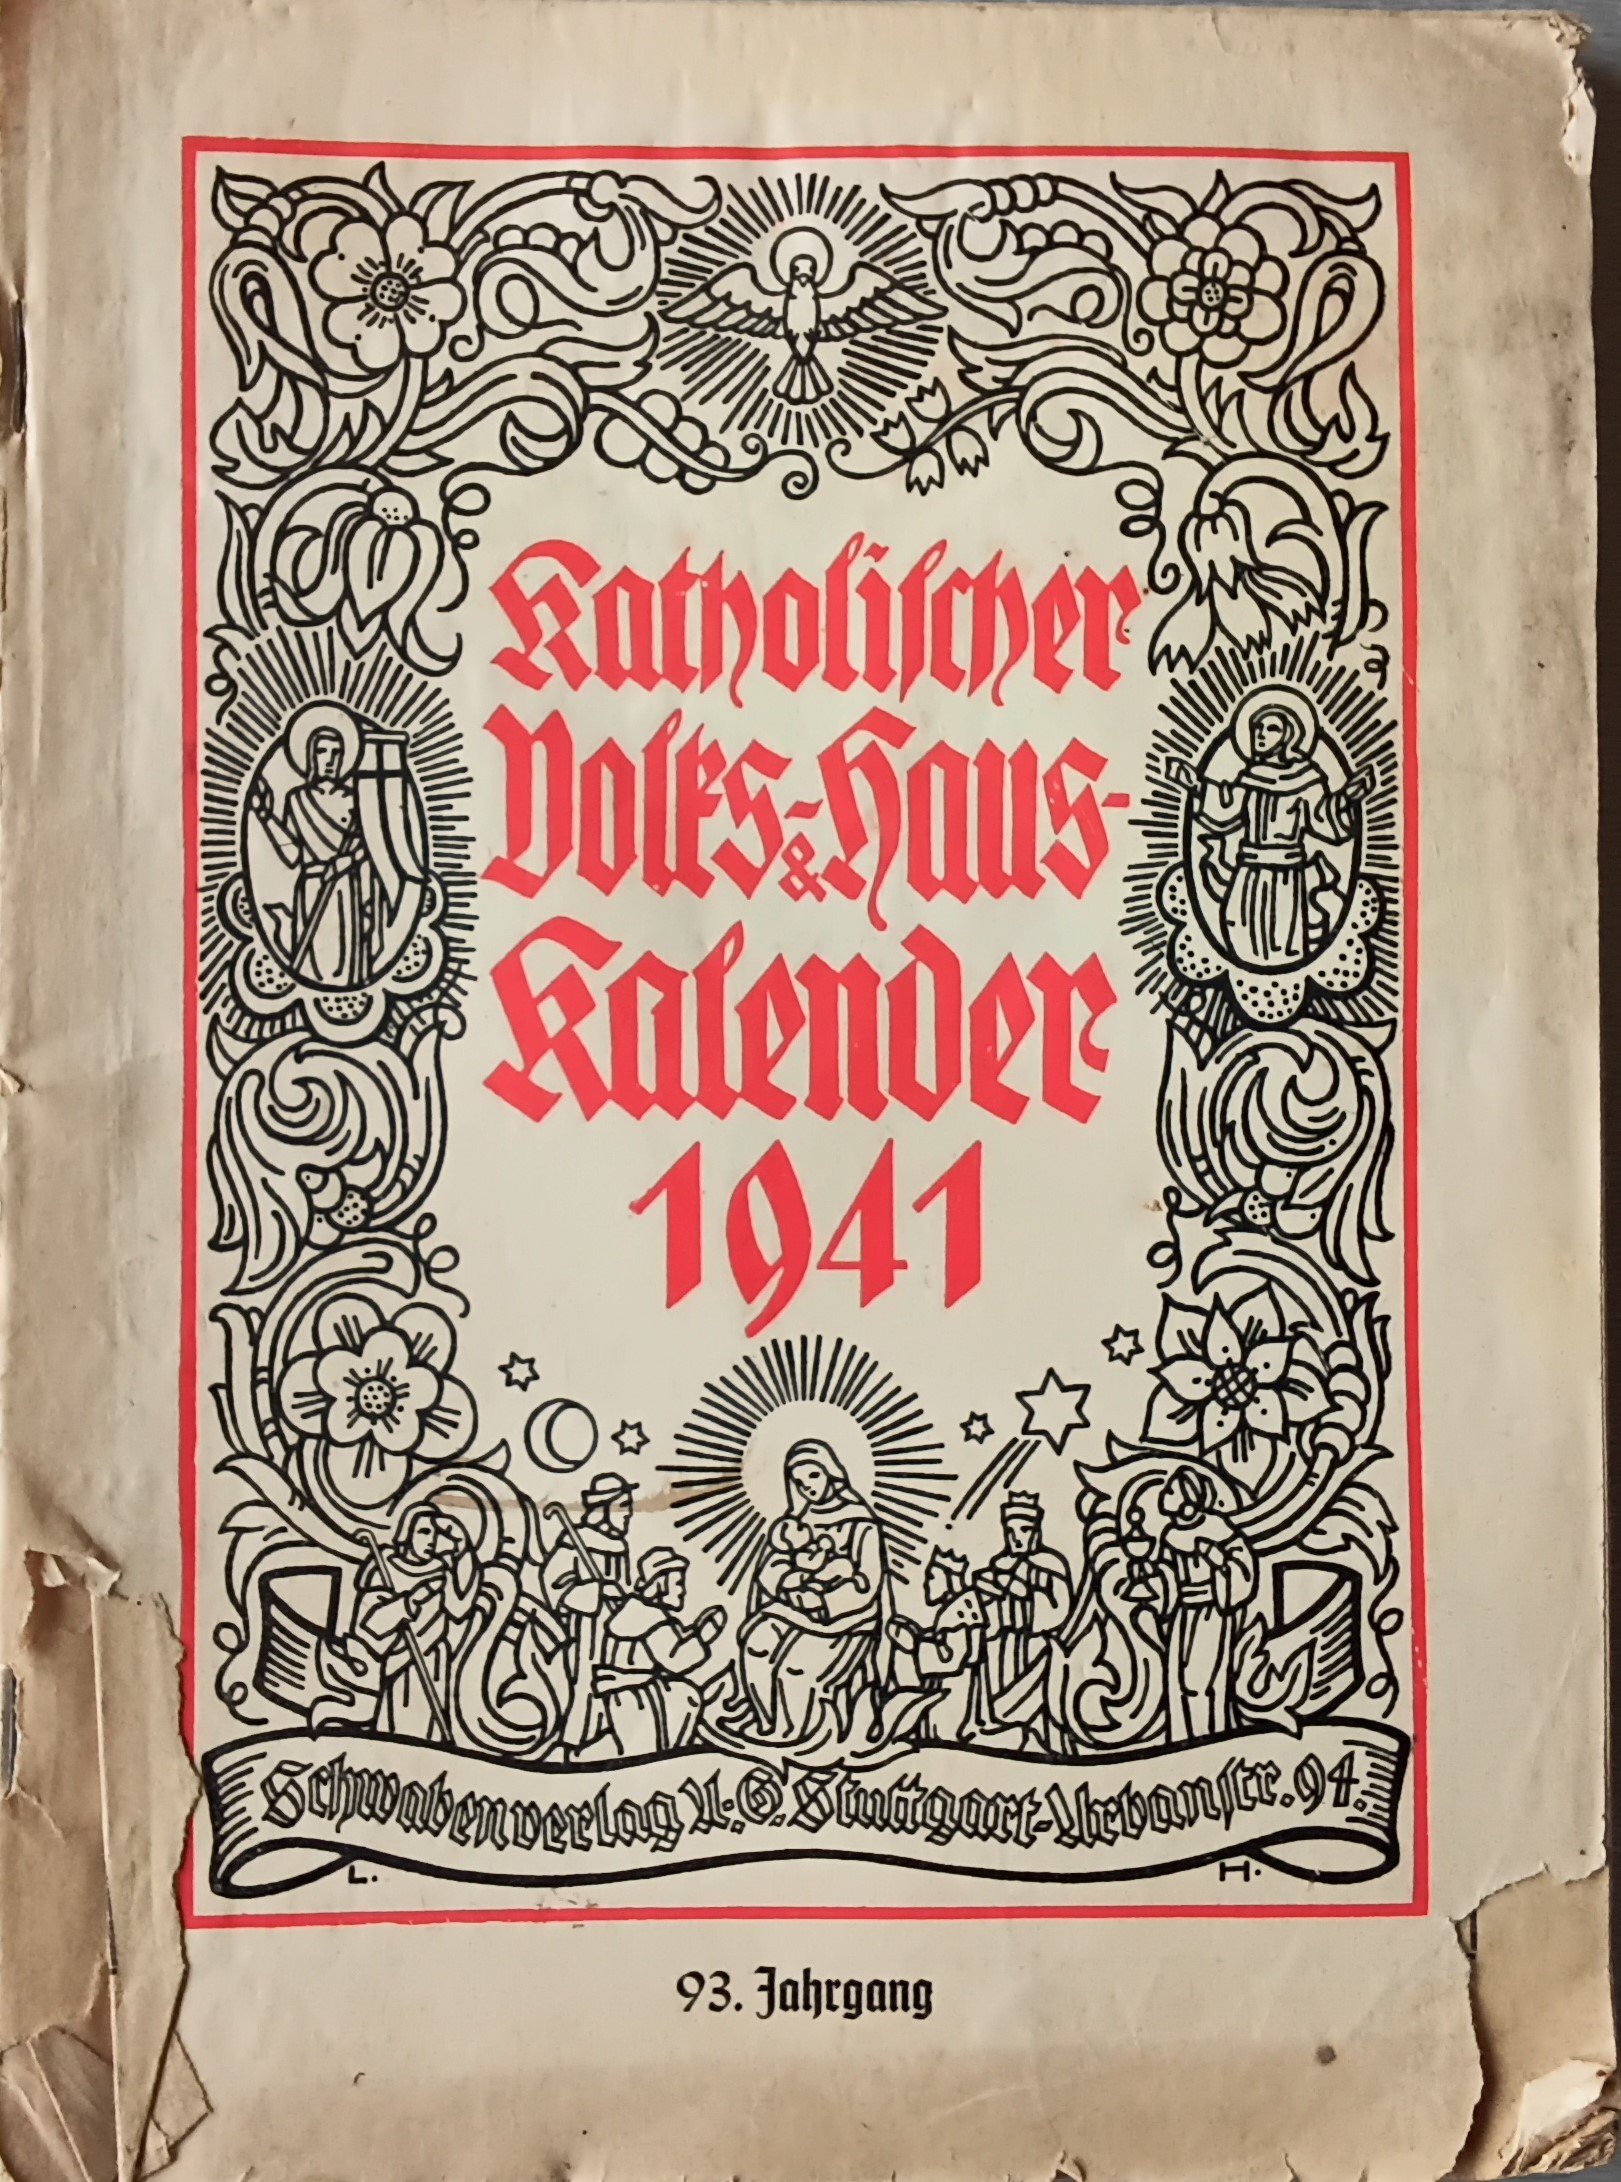 Kath Volks und Hauskalender 1941 (Heimatmuseum Aichstetten CC BY-NC-SA)